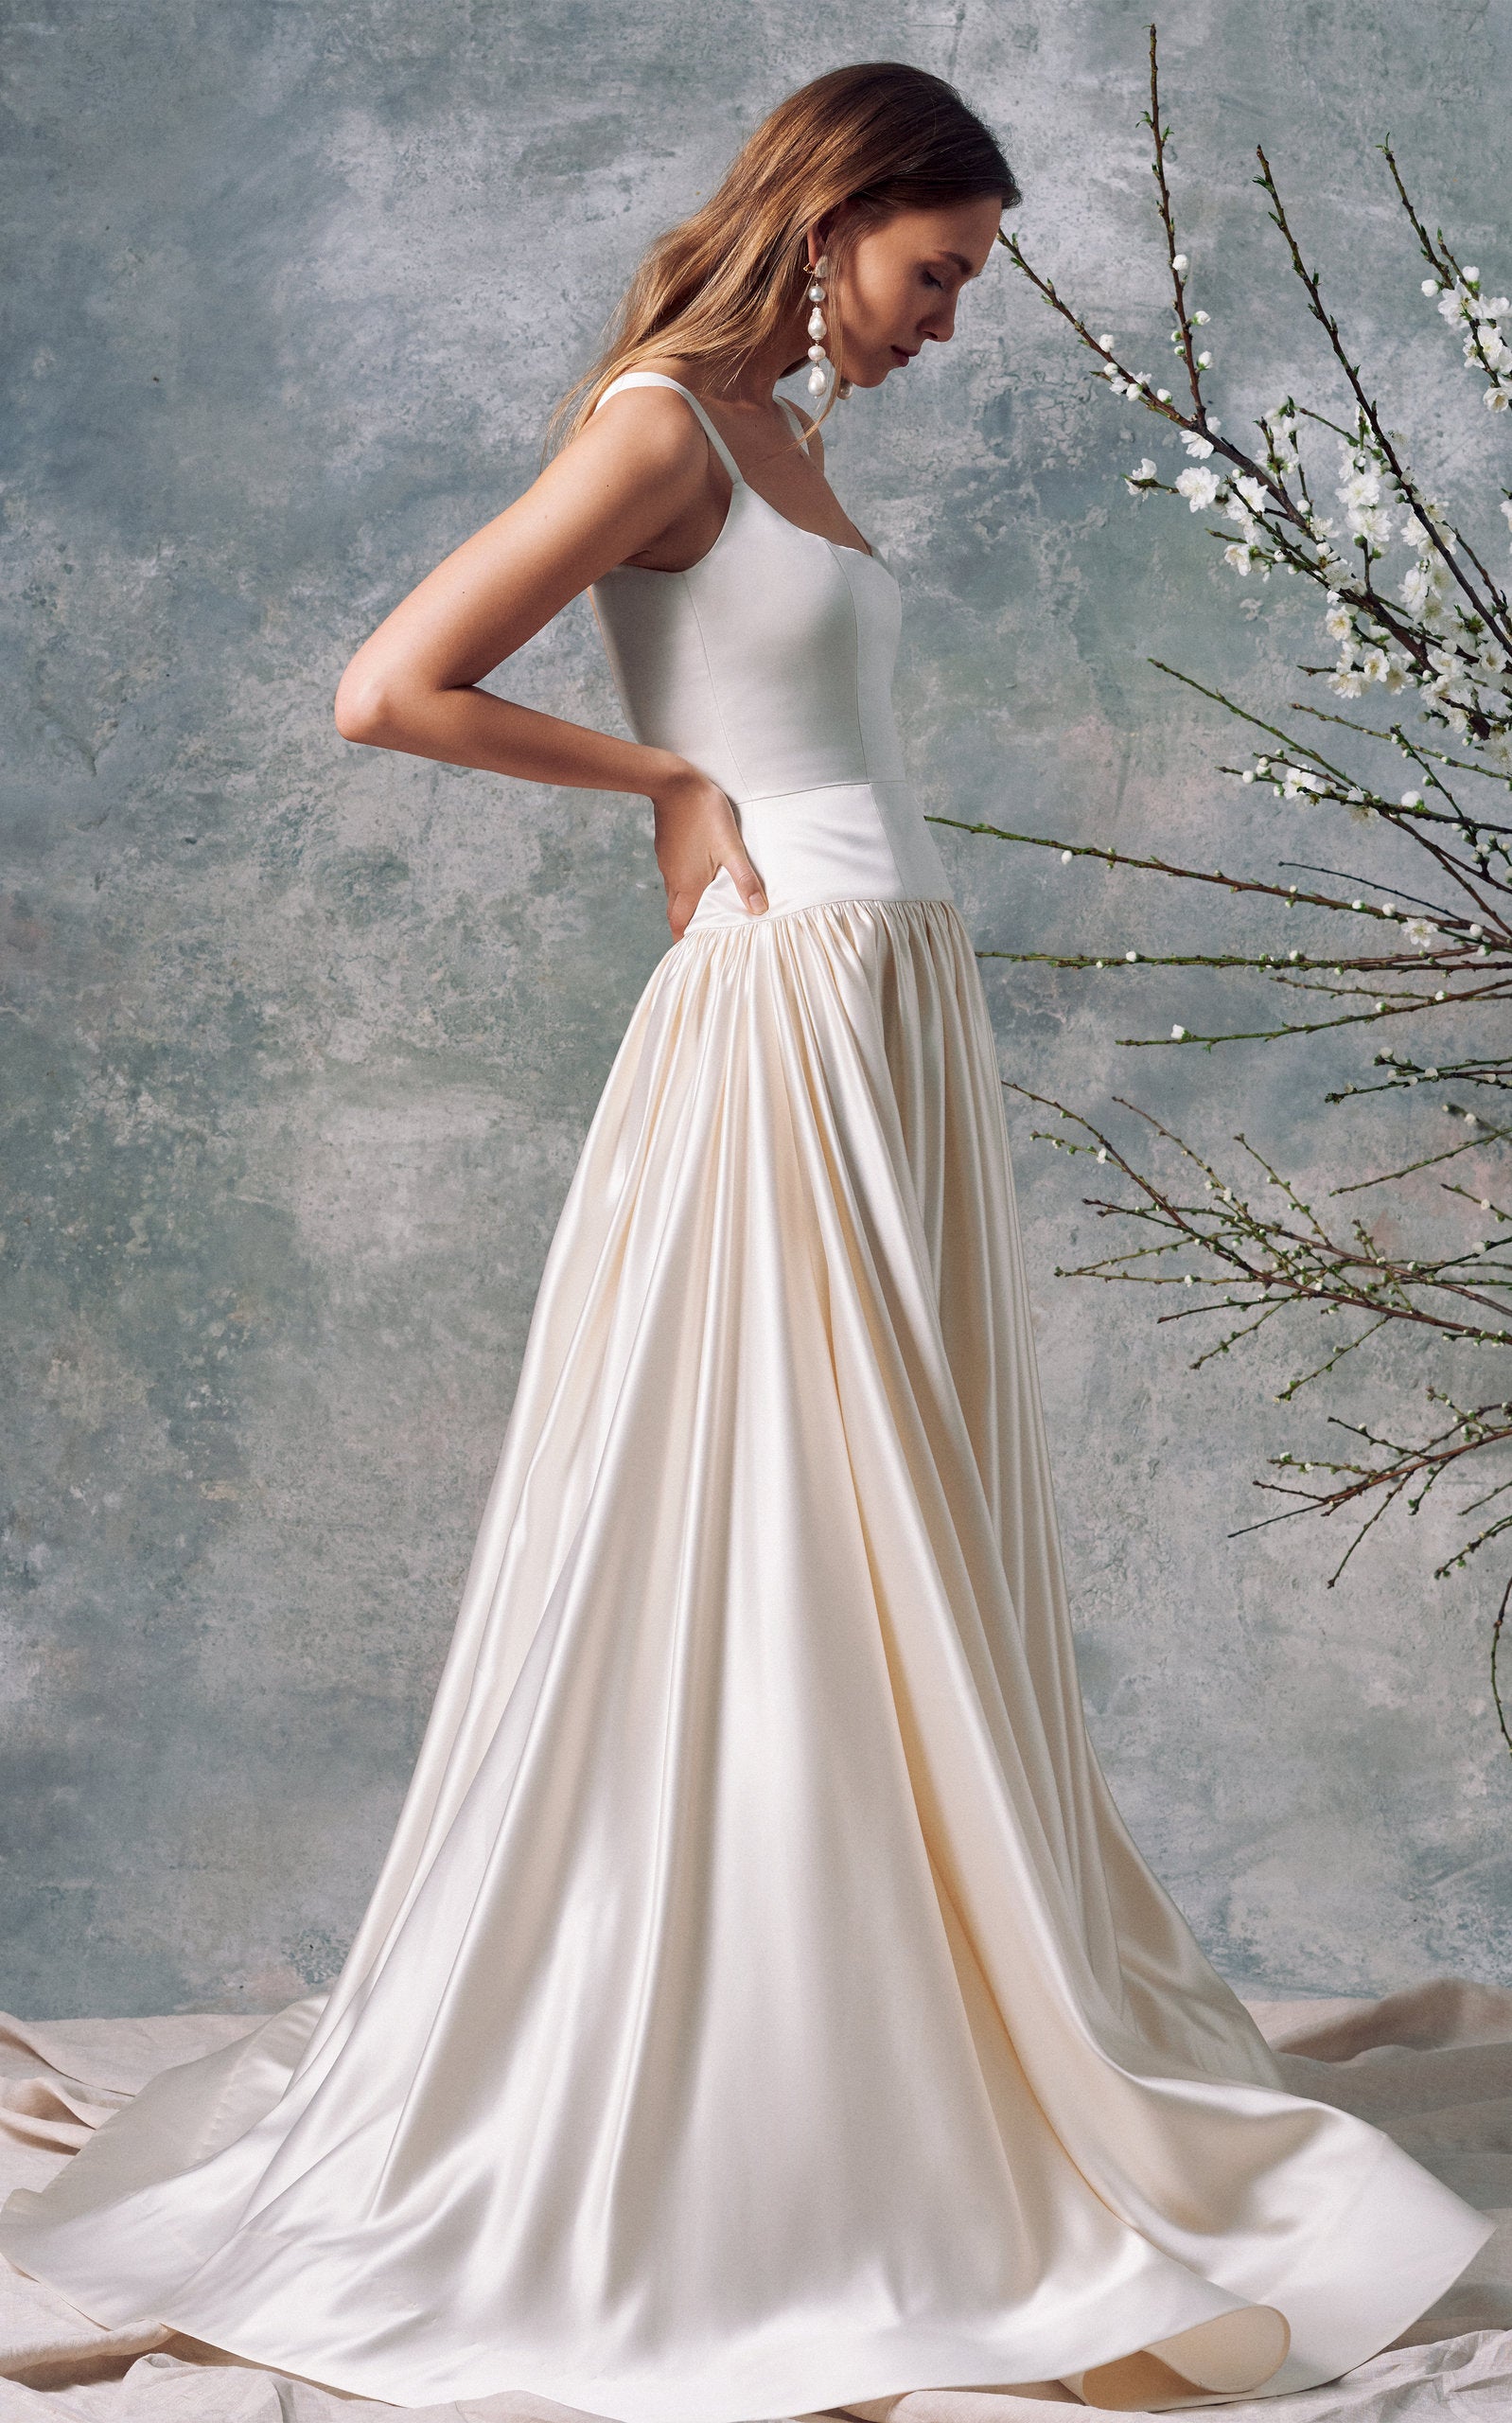 White dress for bride - Wedding dresses Melbourne - Leah S